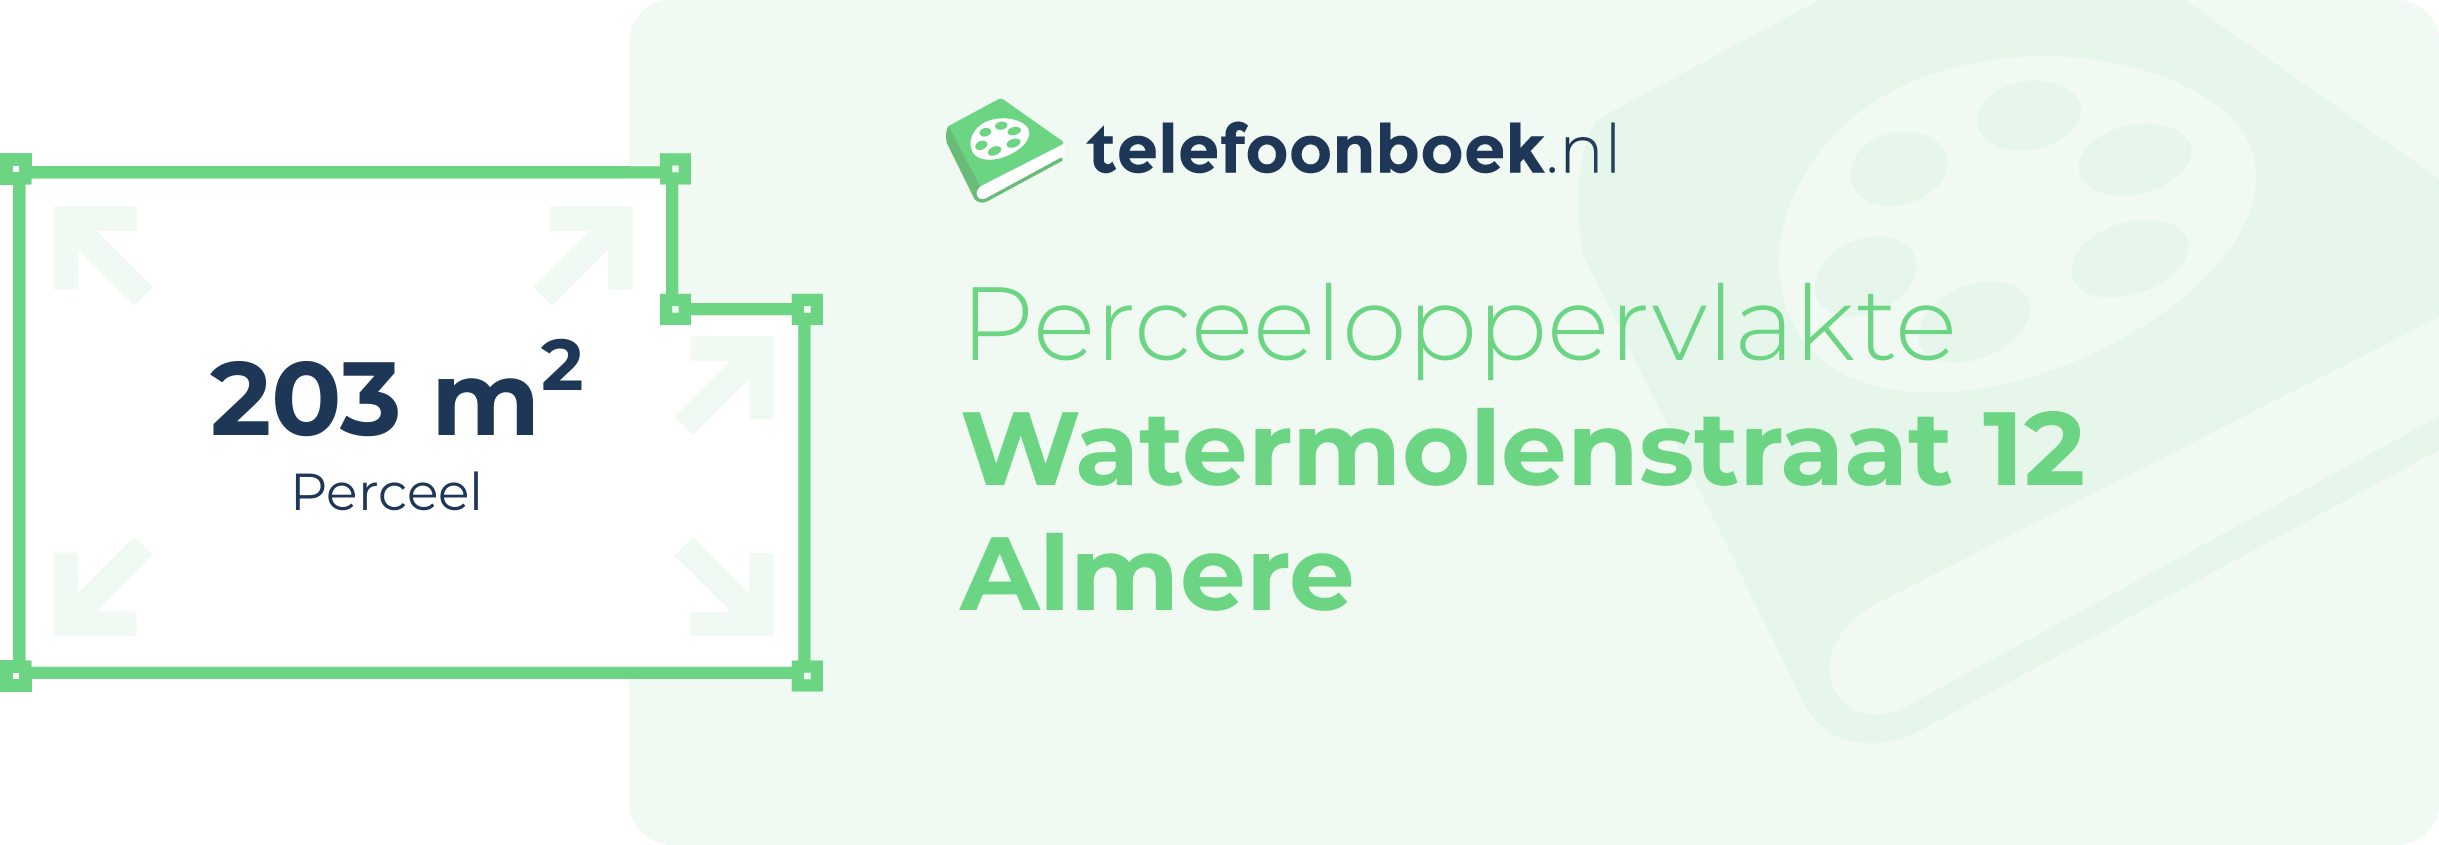 Perceeloppervlakte Watermolenstraat 12 Almere